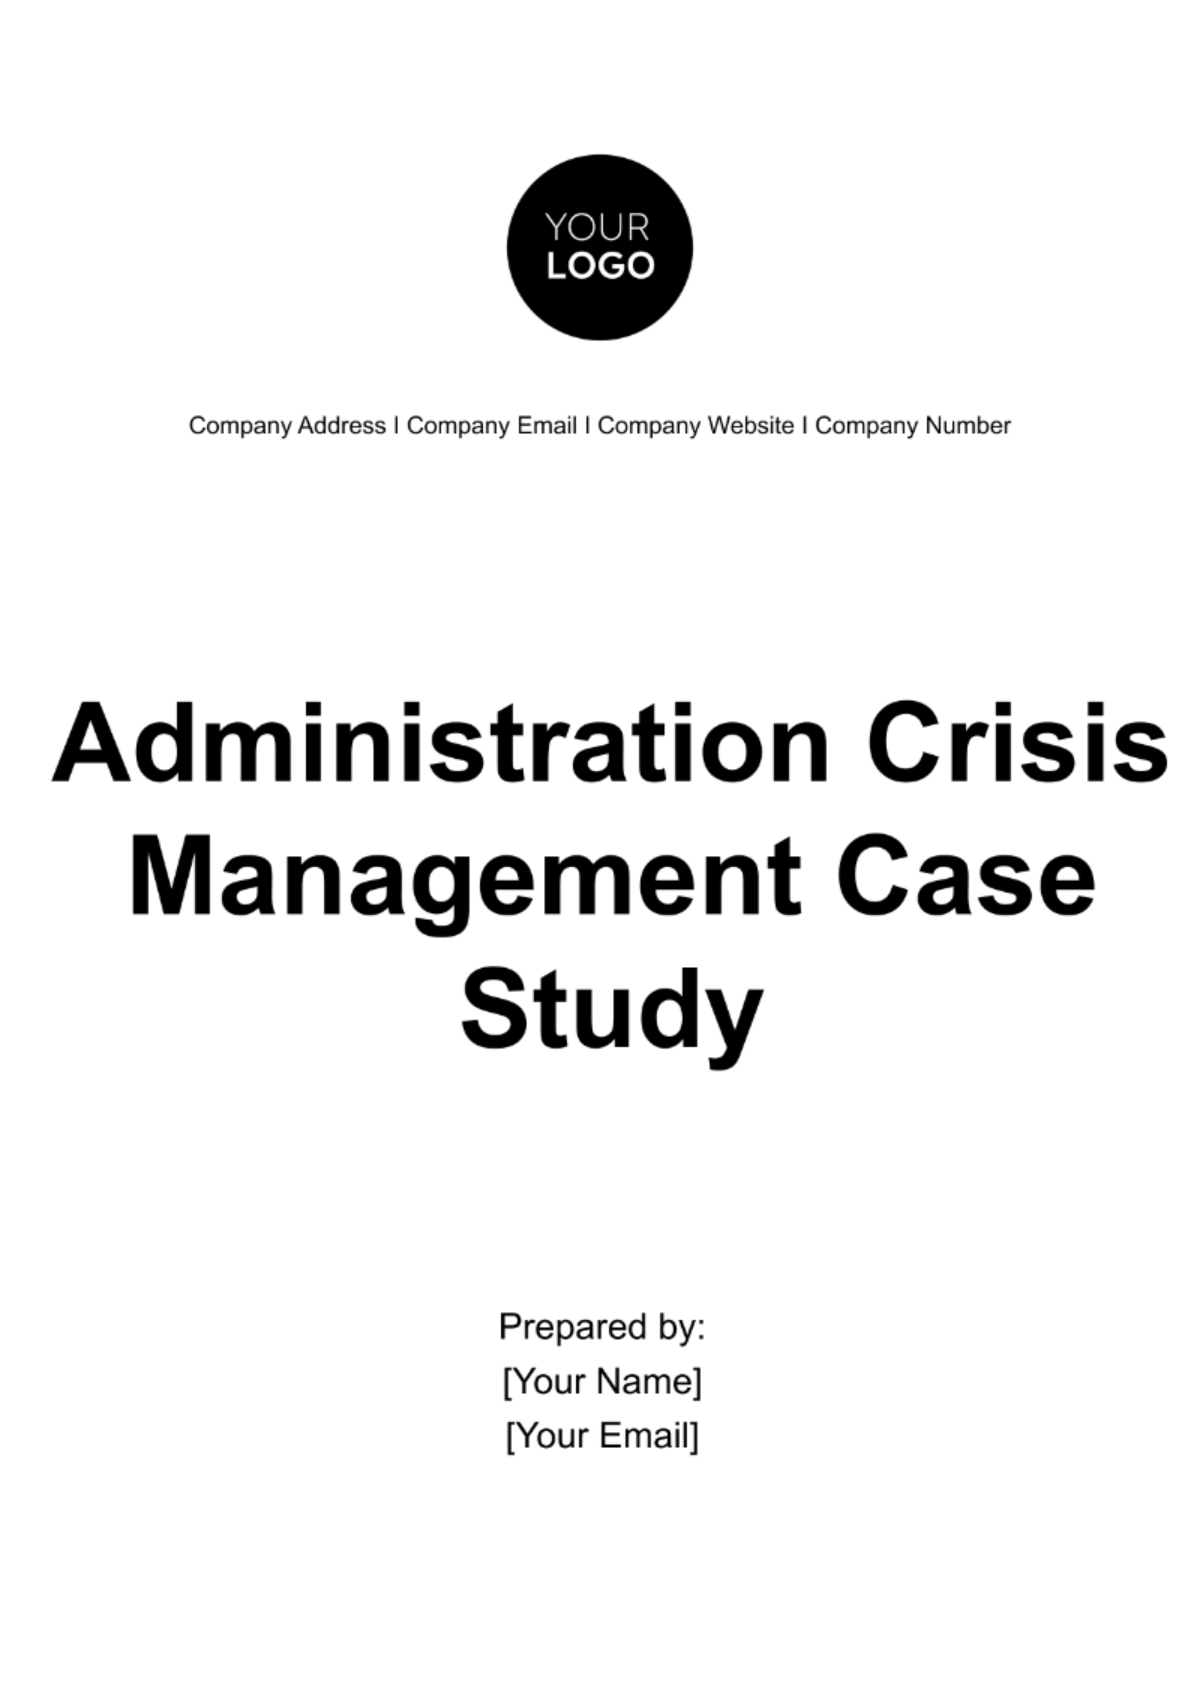 Administration Crisis Management Case Study Template